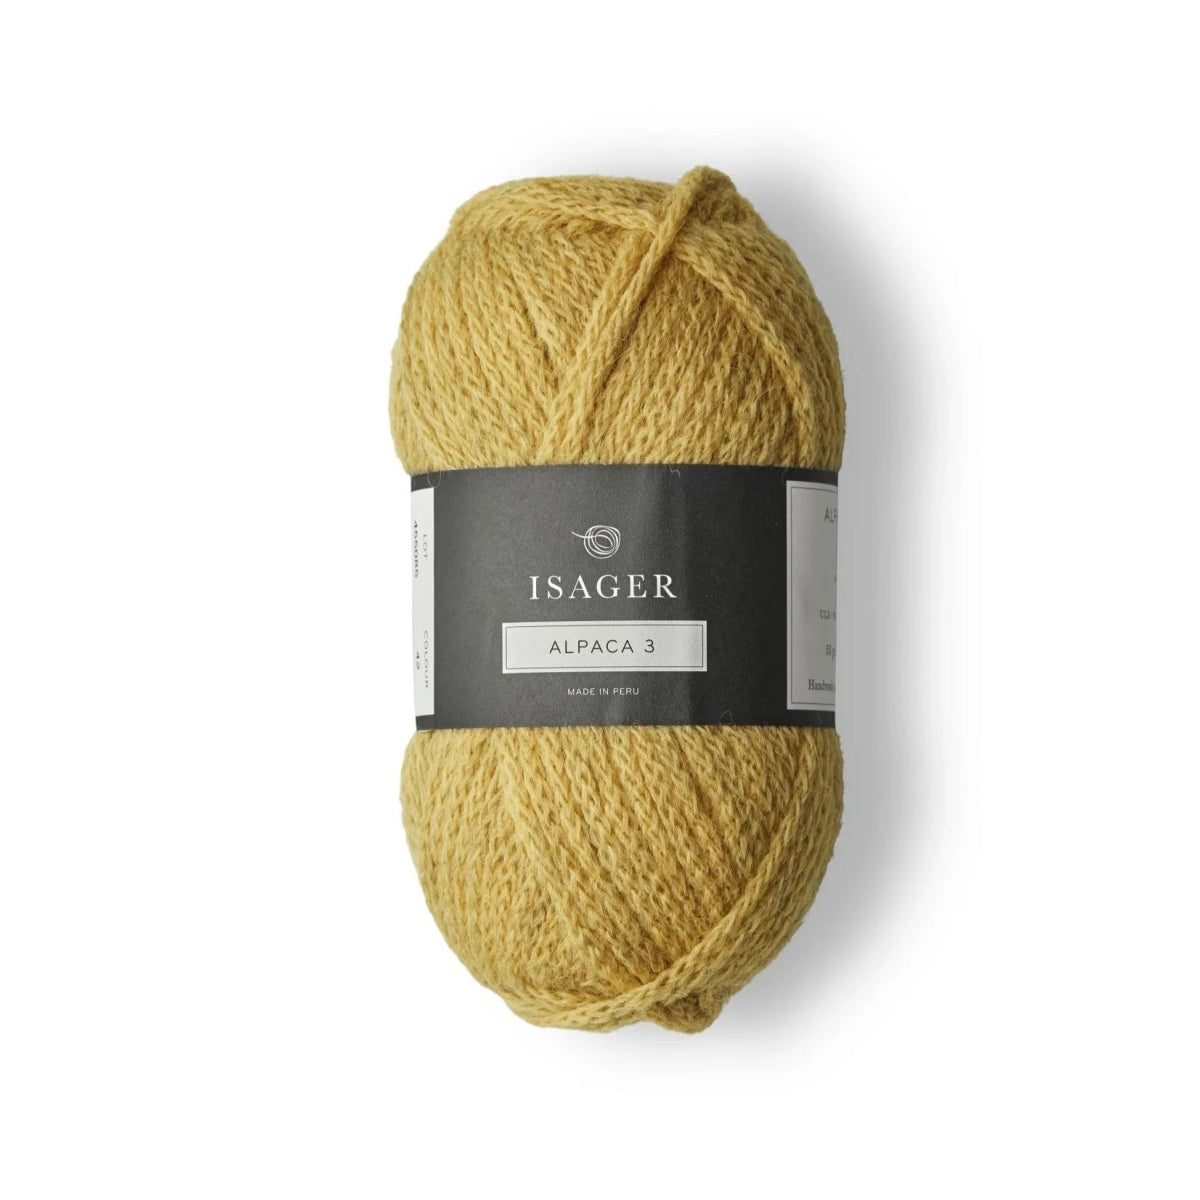 Isager Alpaca 3 - 59 - 8 Ply - Alpaca - The Little Yarn Store